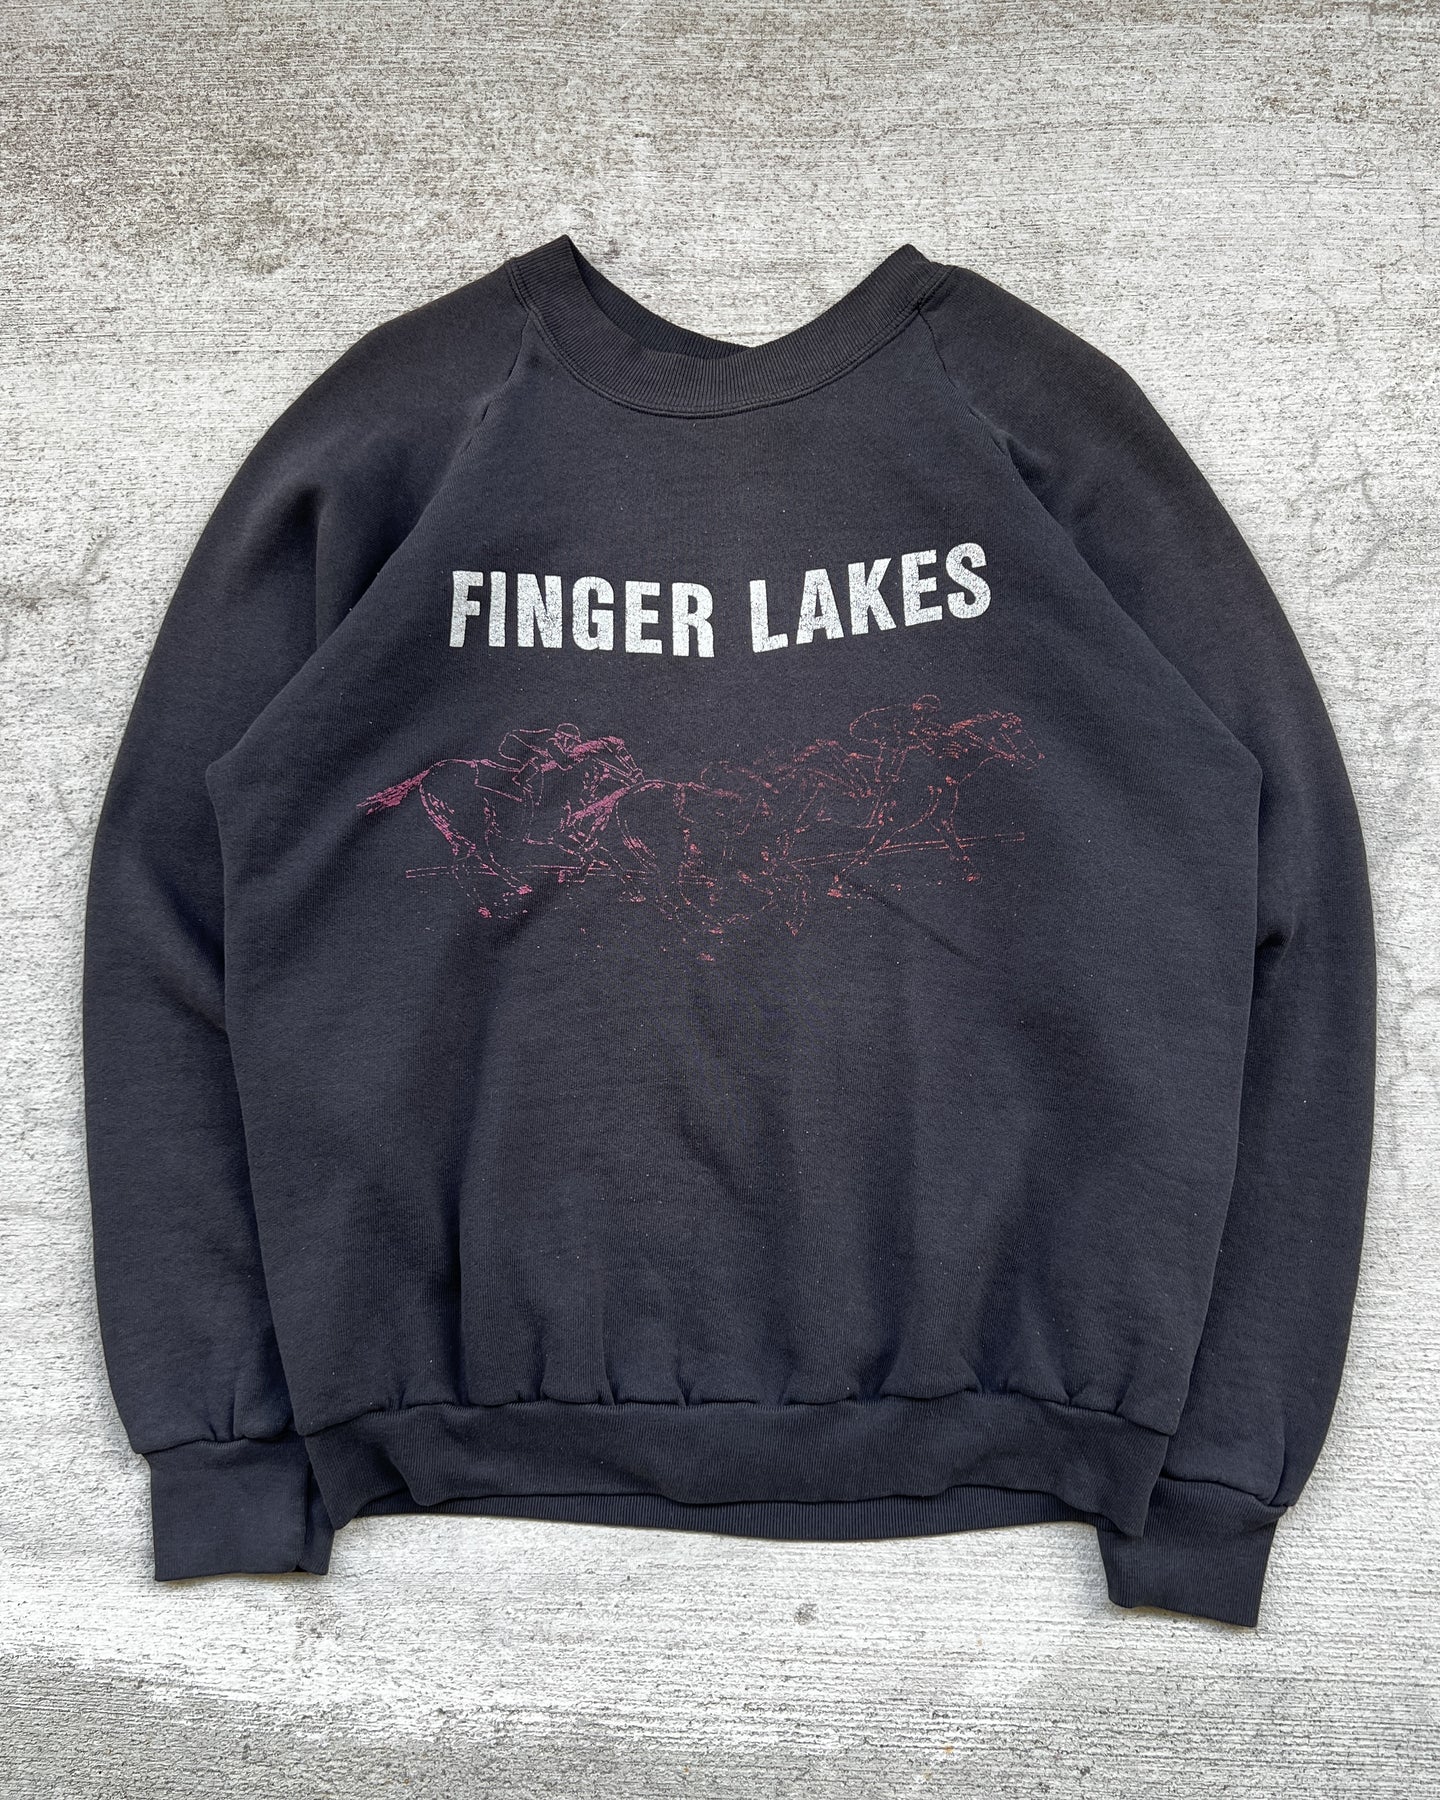 1990s Finger Lakes Raglan Cut Crewneck - Size Large